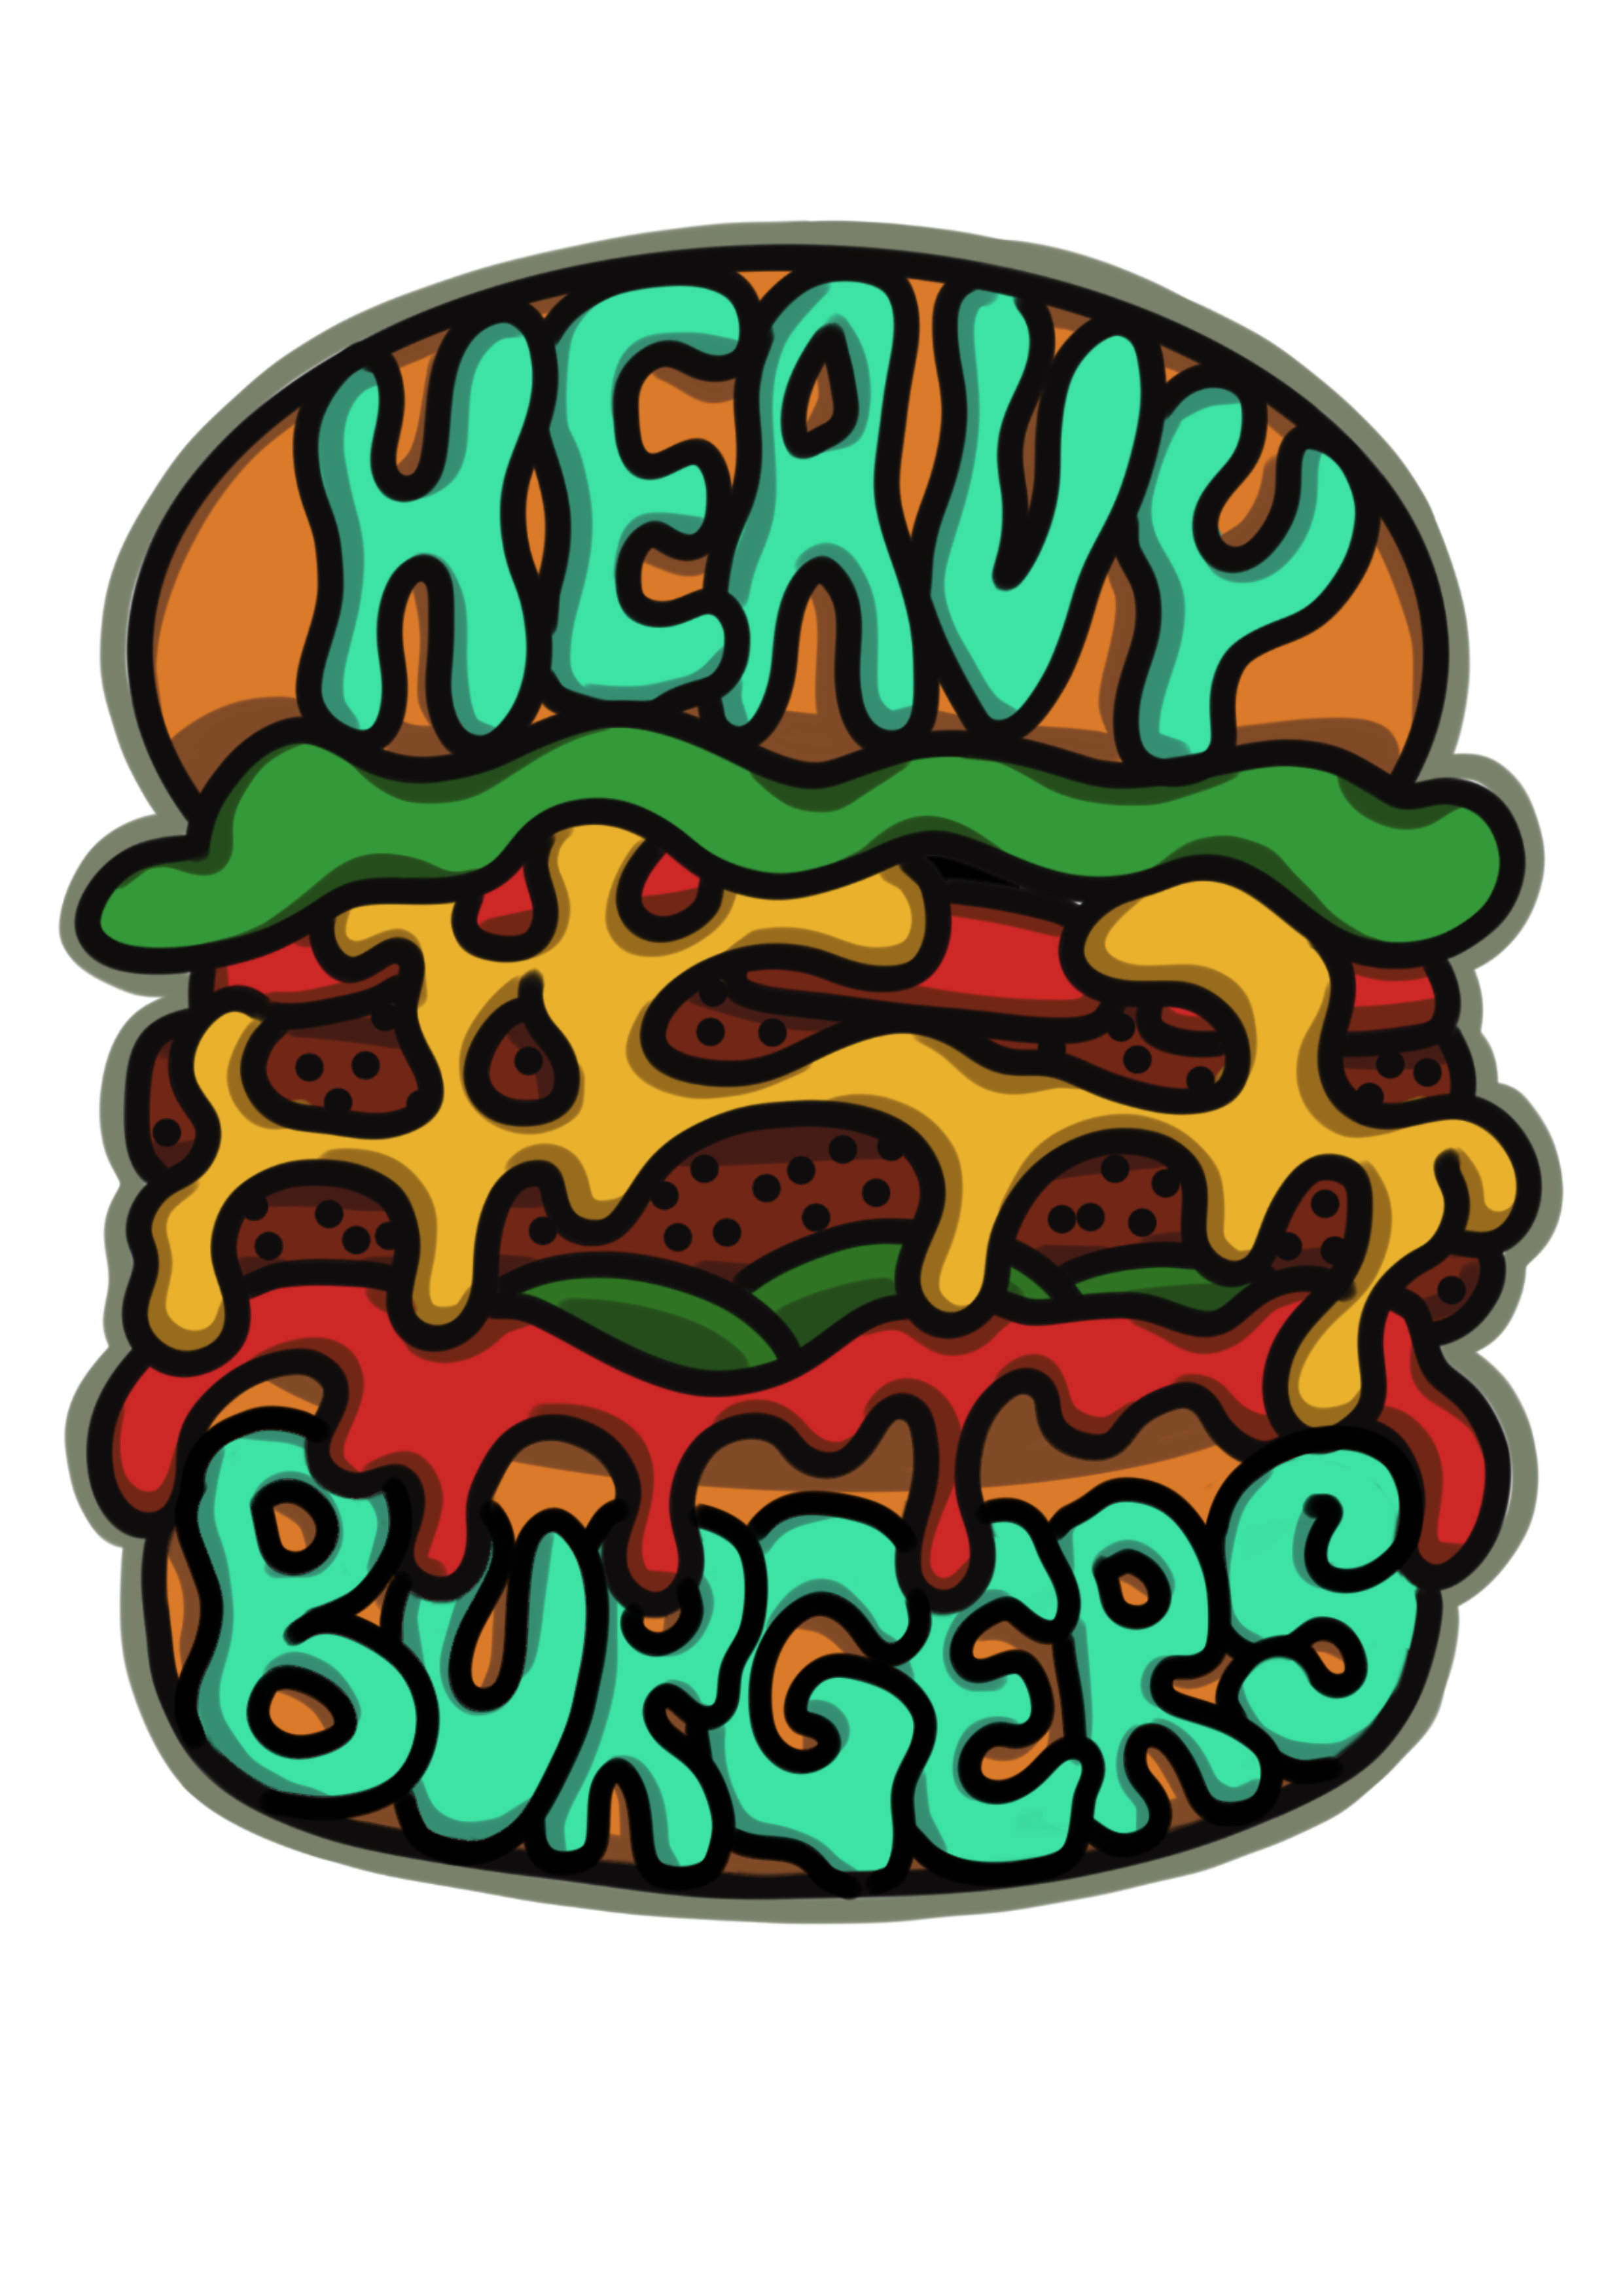 Heavy Burgers 2: 